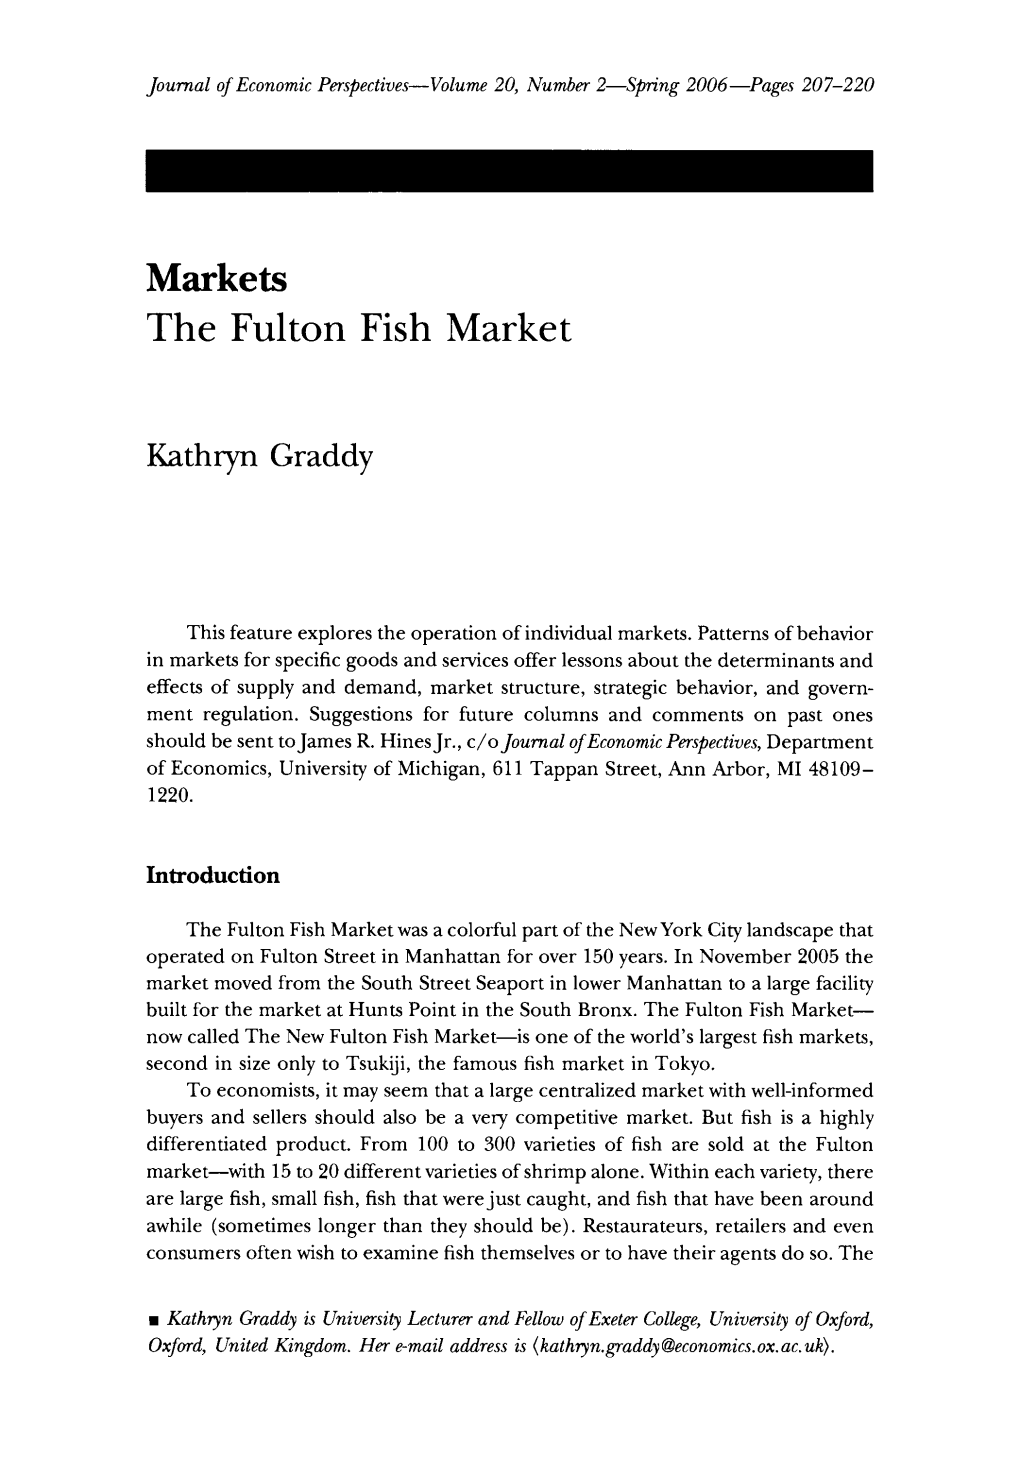 Markets: the Fulton Fish Market